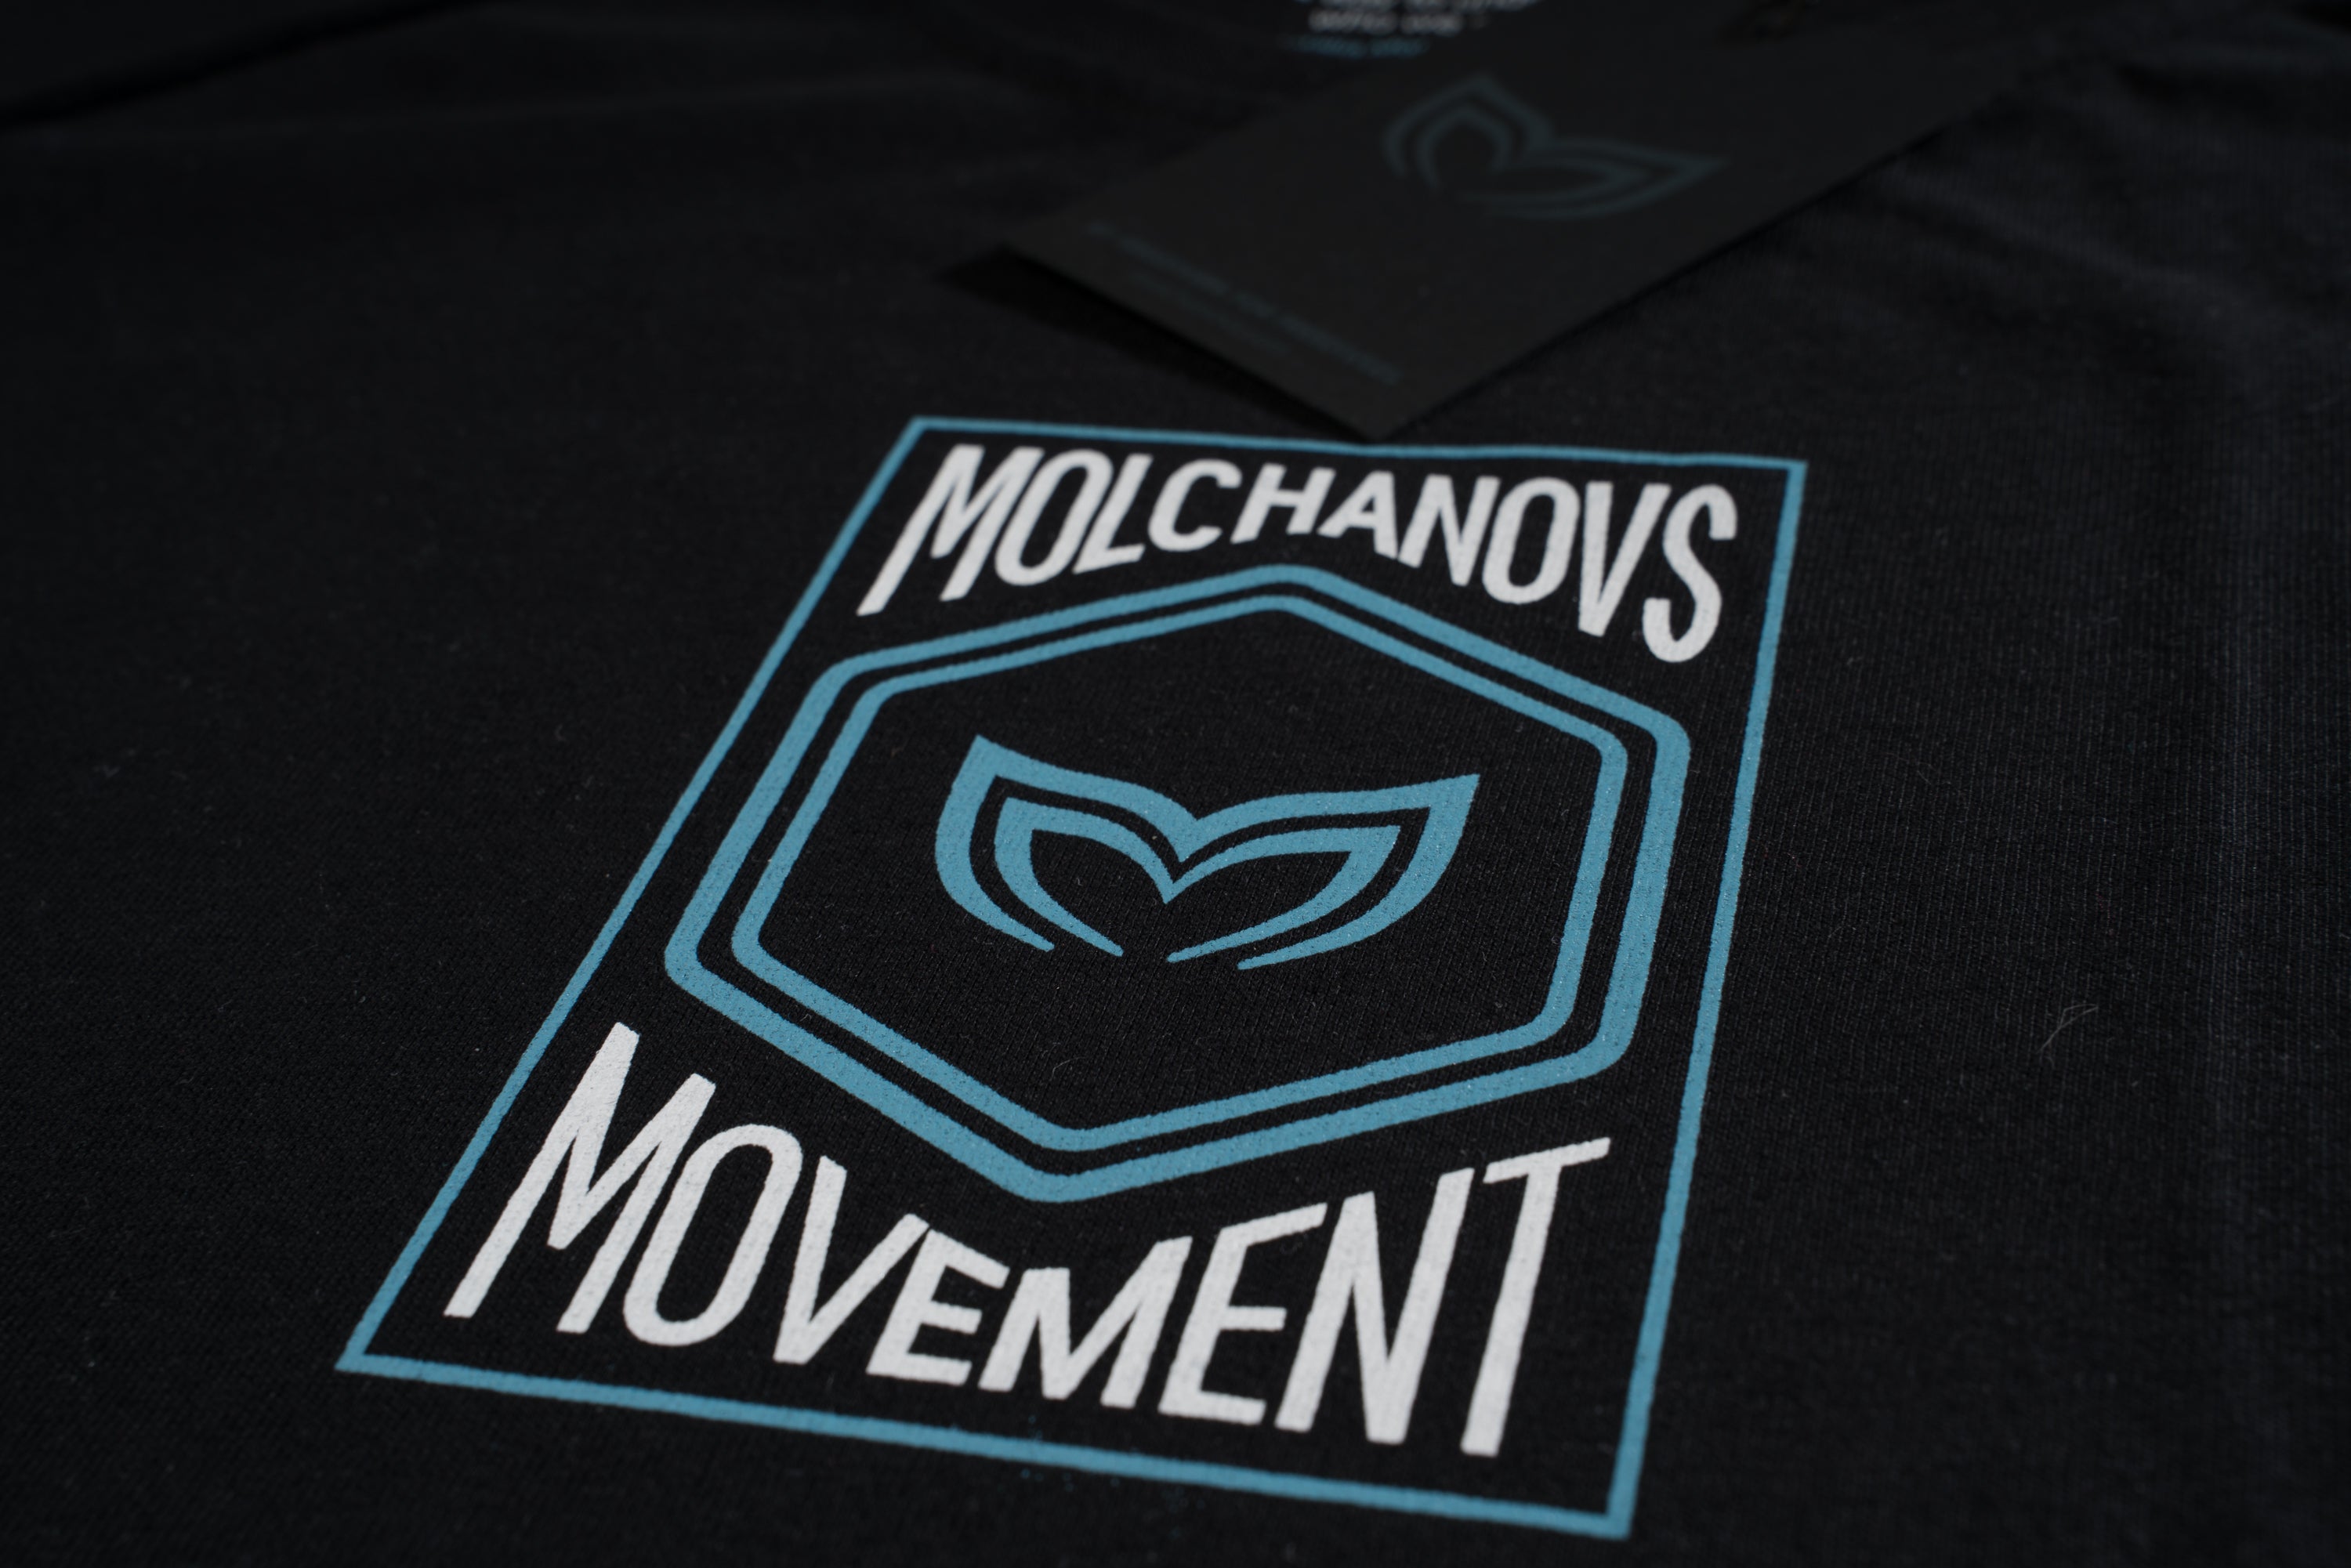 Molchanovs Movement Tee